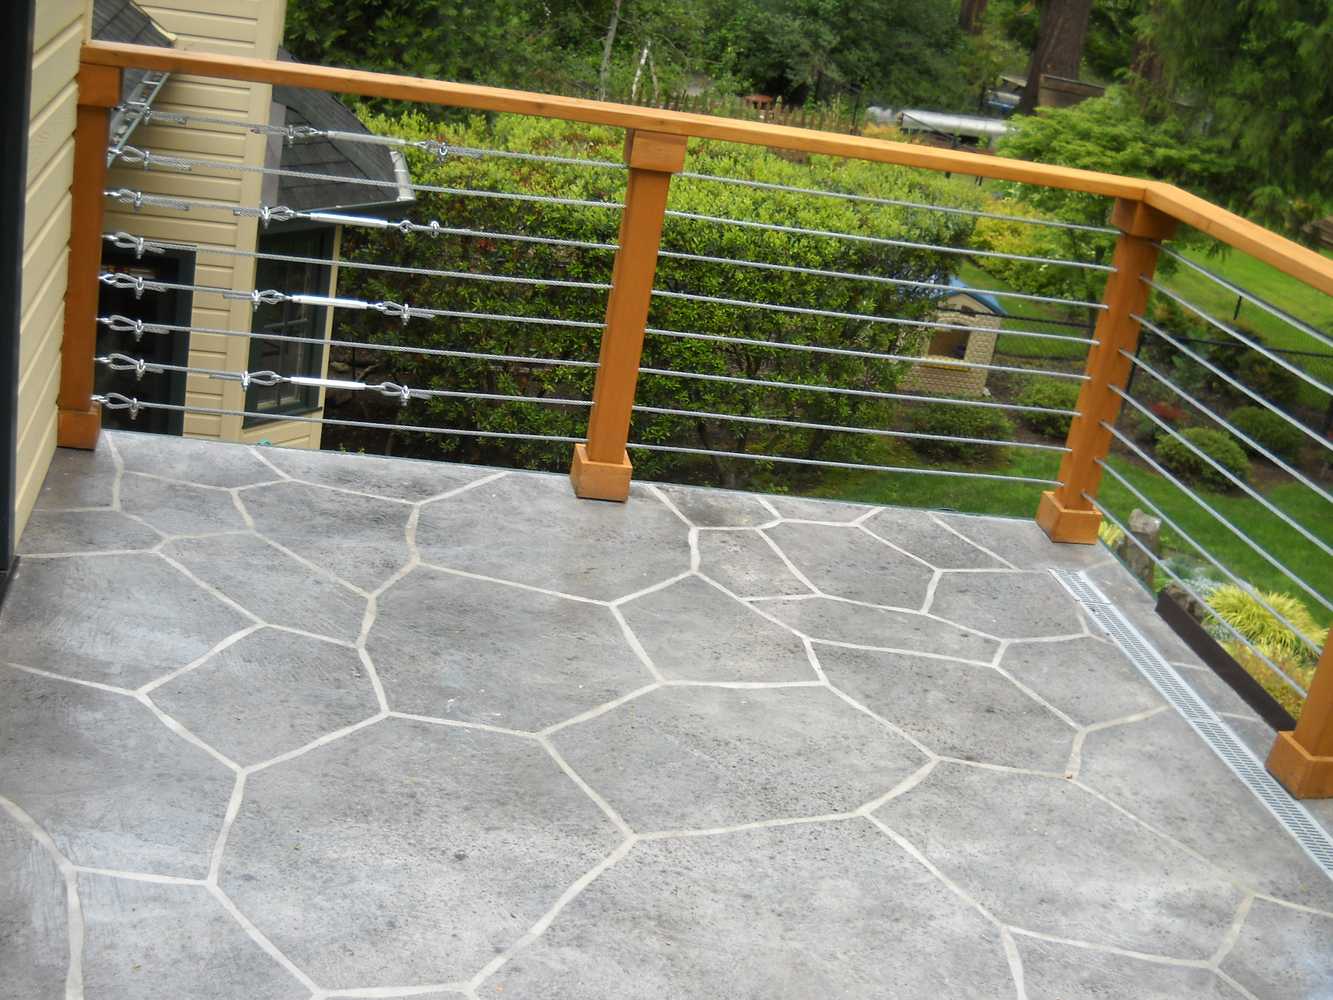 Icoat Concrete exterior flooring overlay system.